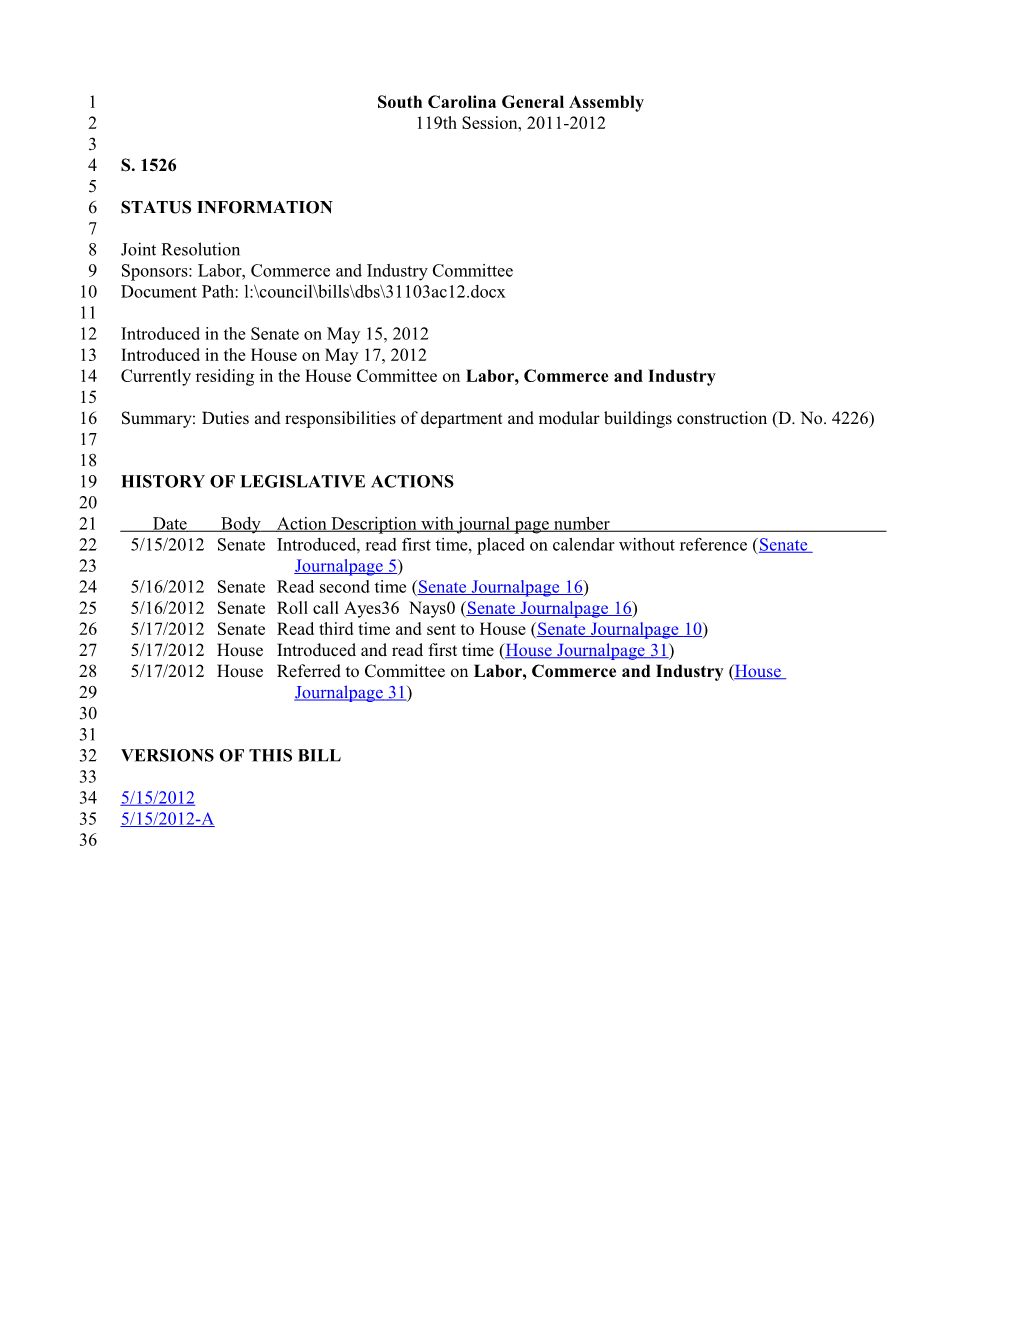 2011-2012 Bill 1526: Duties and Responsibilities of Department and Modular Buildings